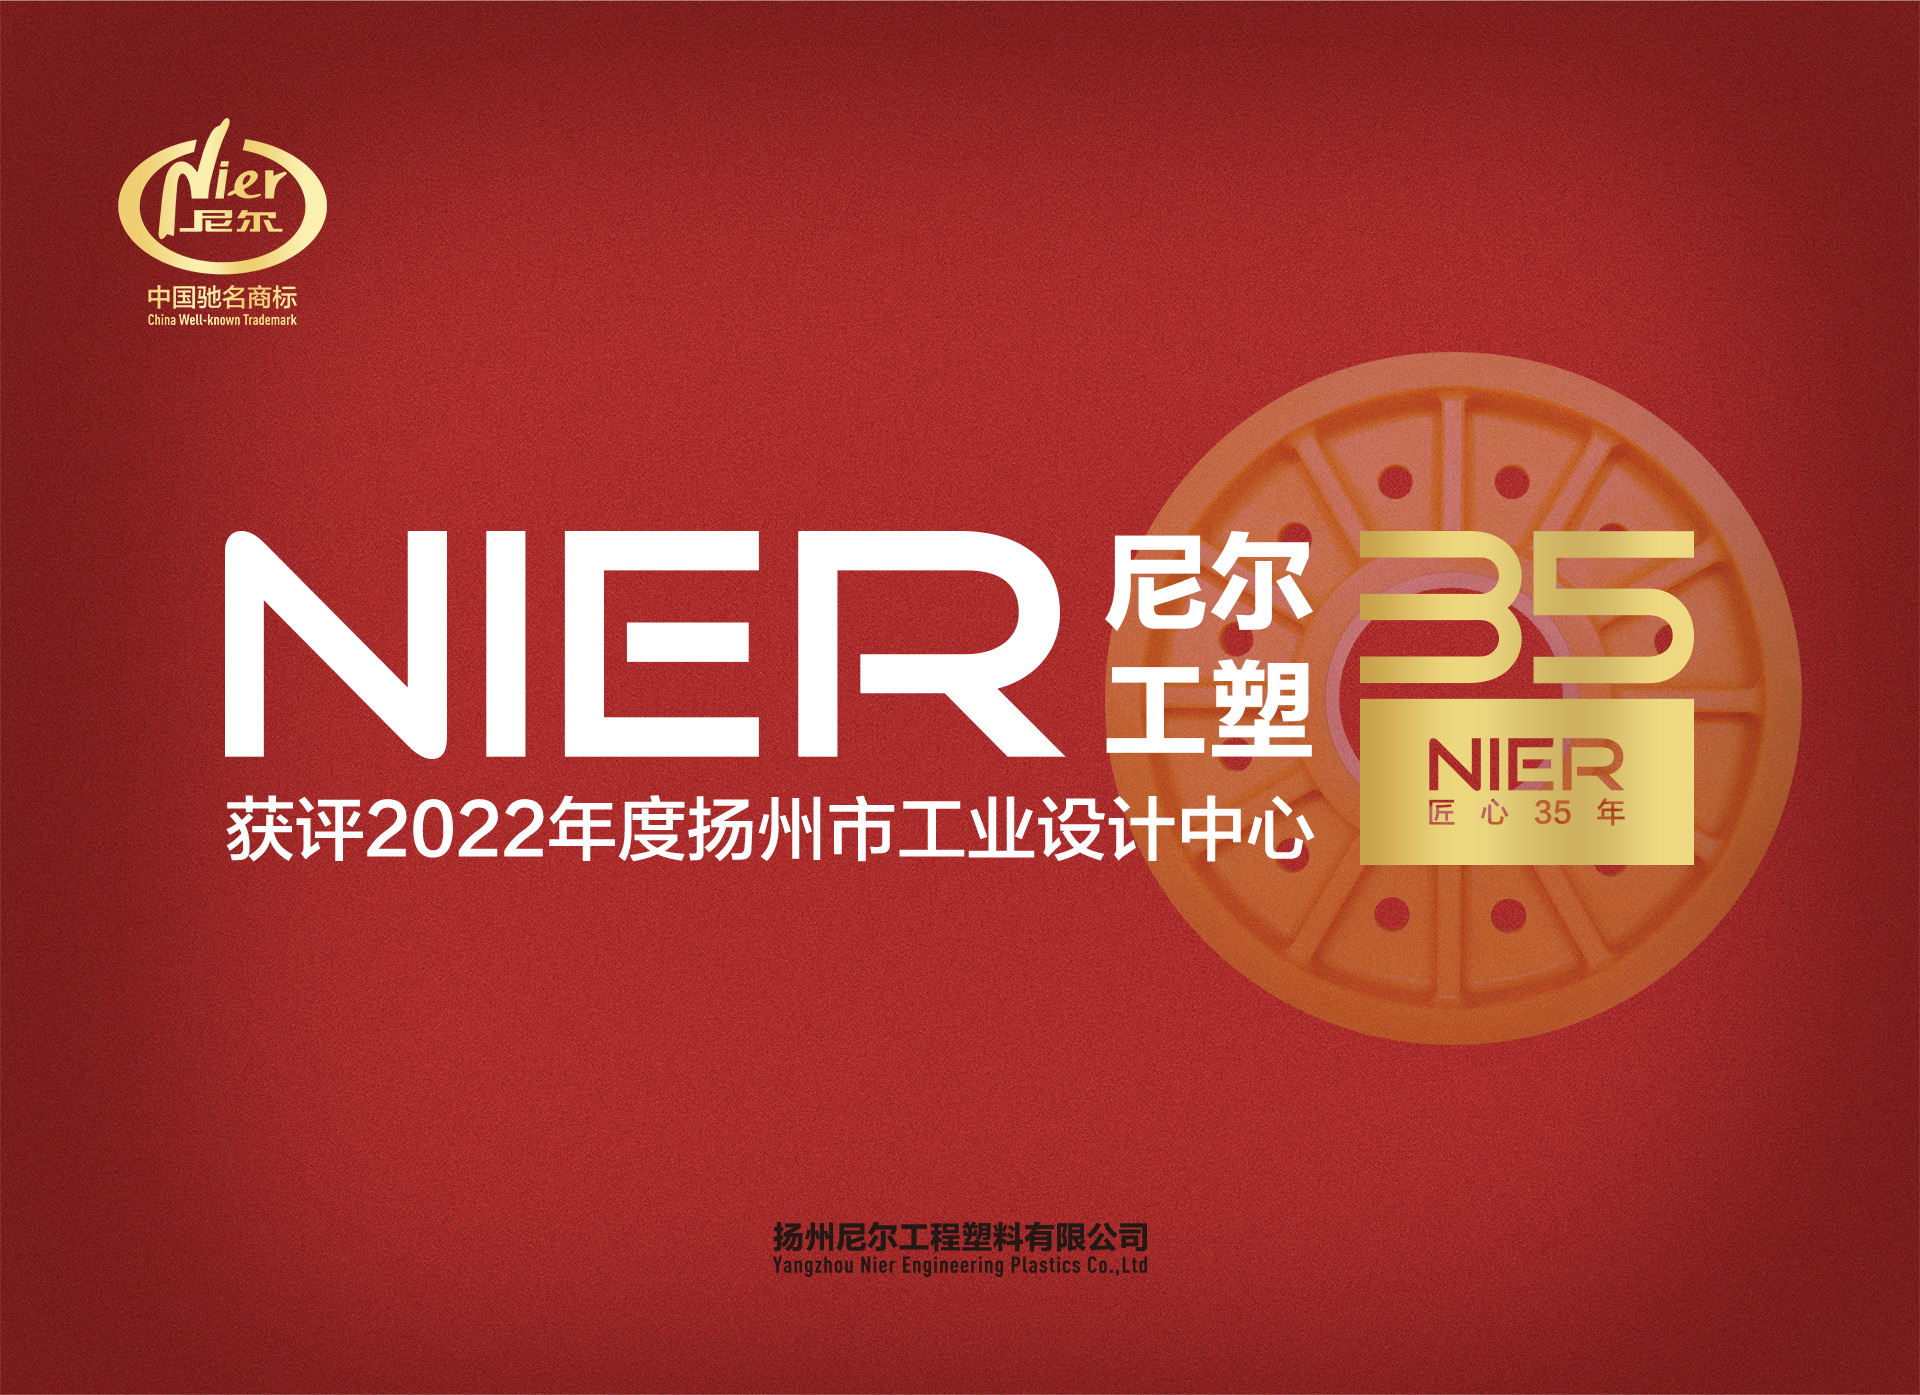 Nier was awarded Yangzhou Industrial Design Center in 2022